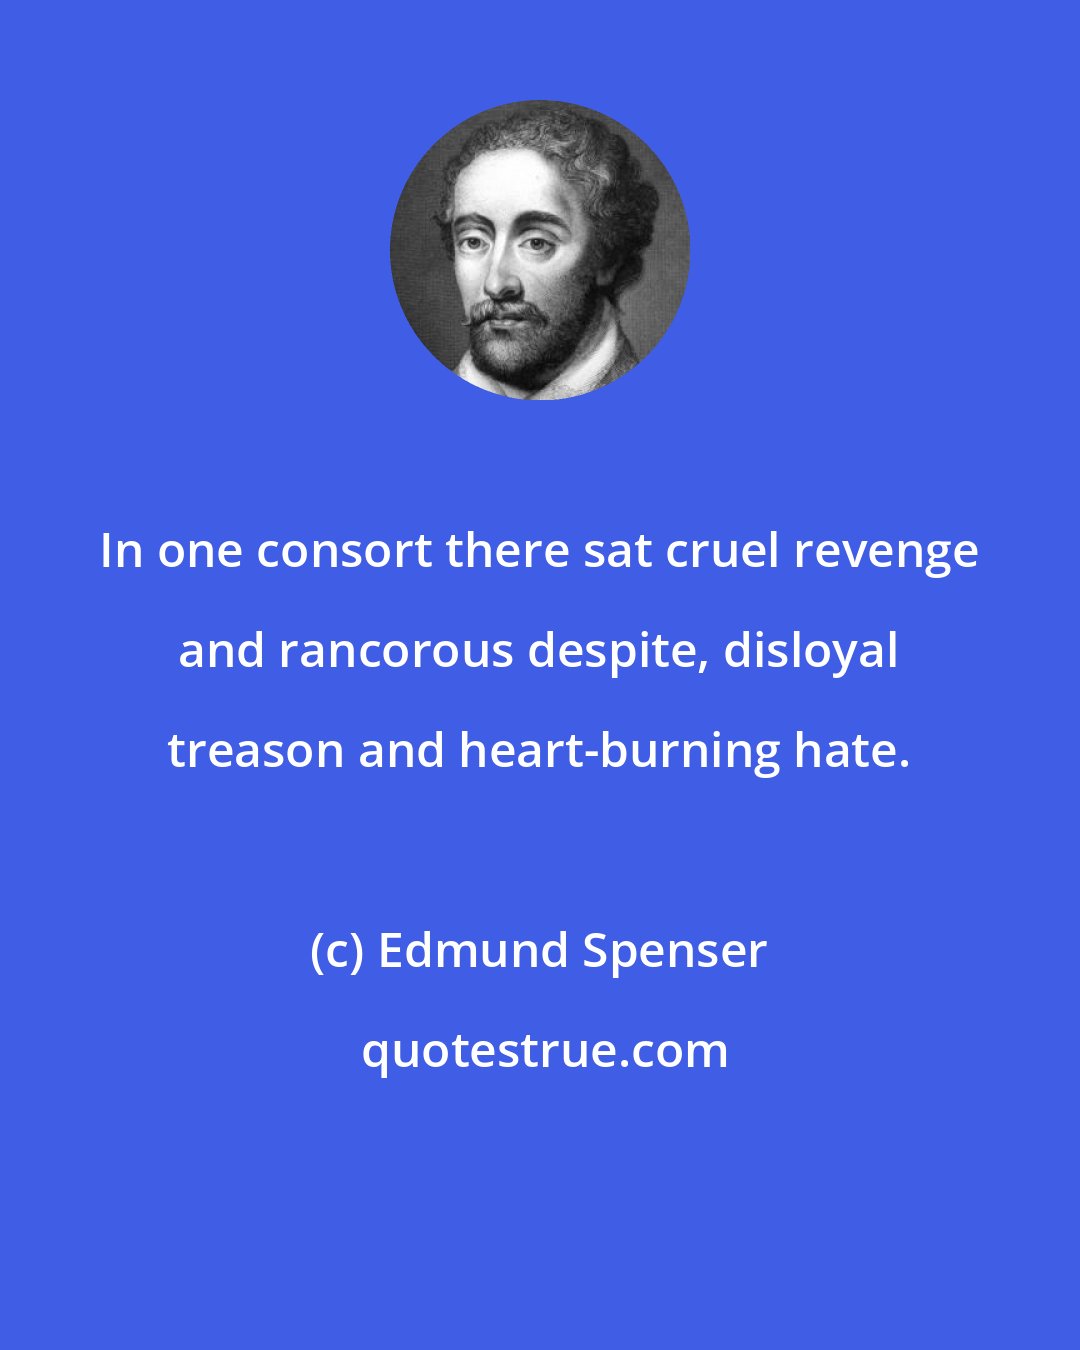 Edmund Spenser: In one consort there sat cruel revenge and rancorous despite, disloyal treason and heart-burning hate.